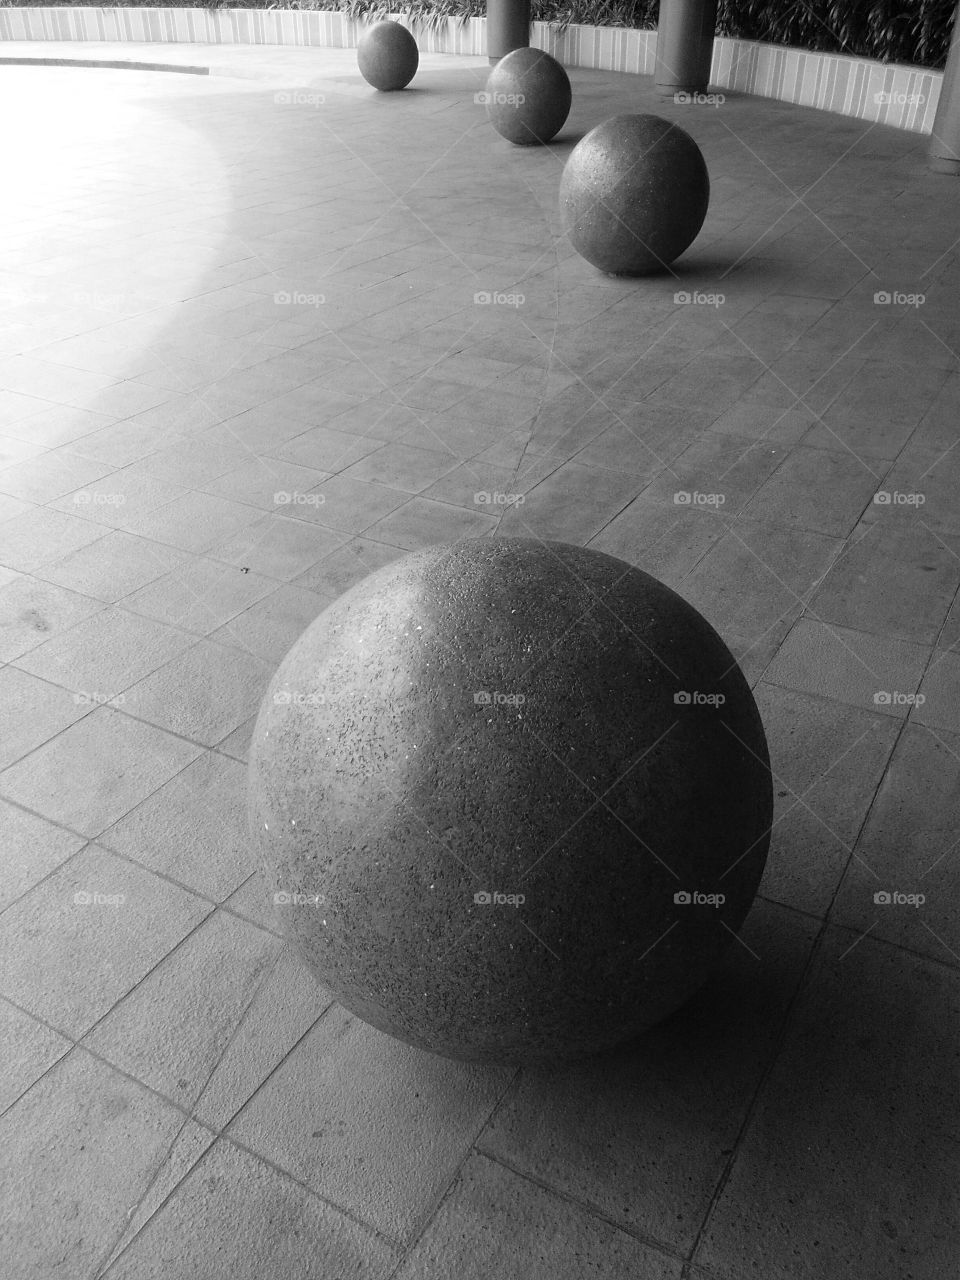 Concrete ball